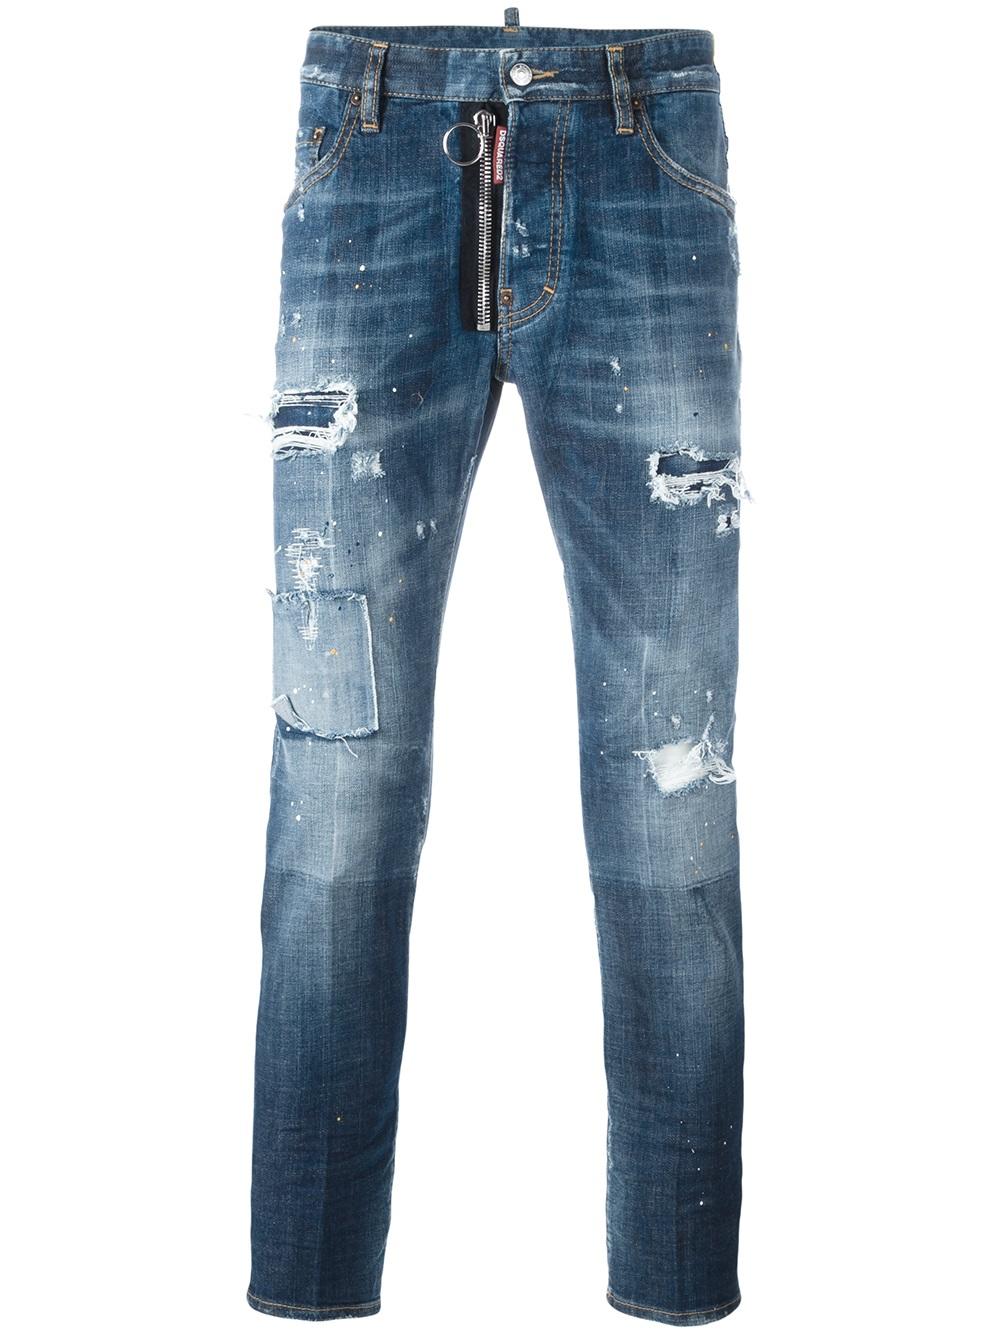 dsquared jeans soldes